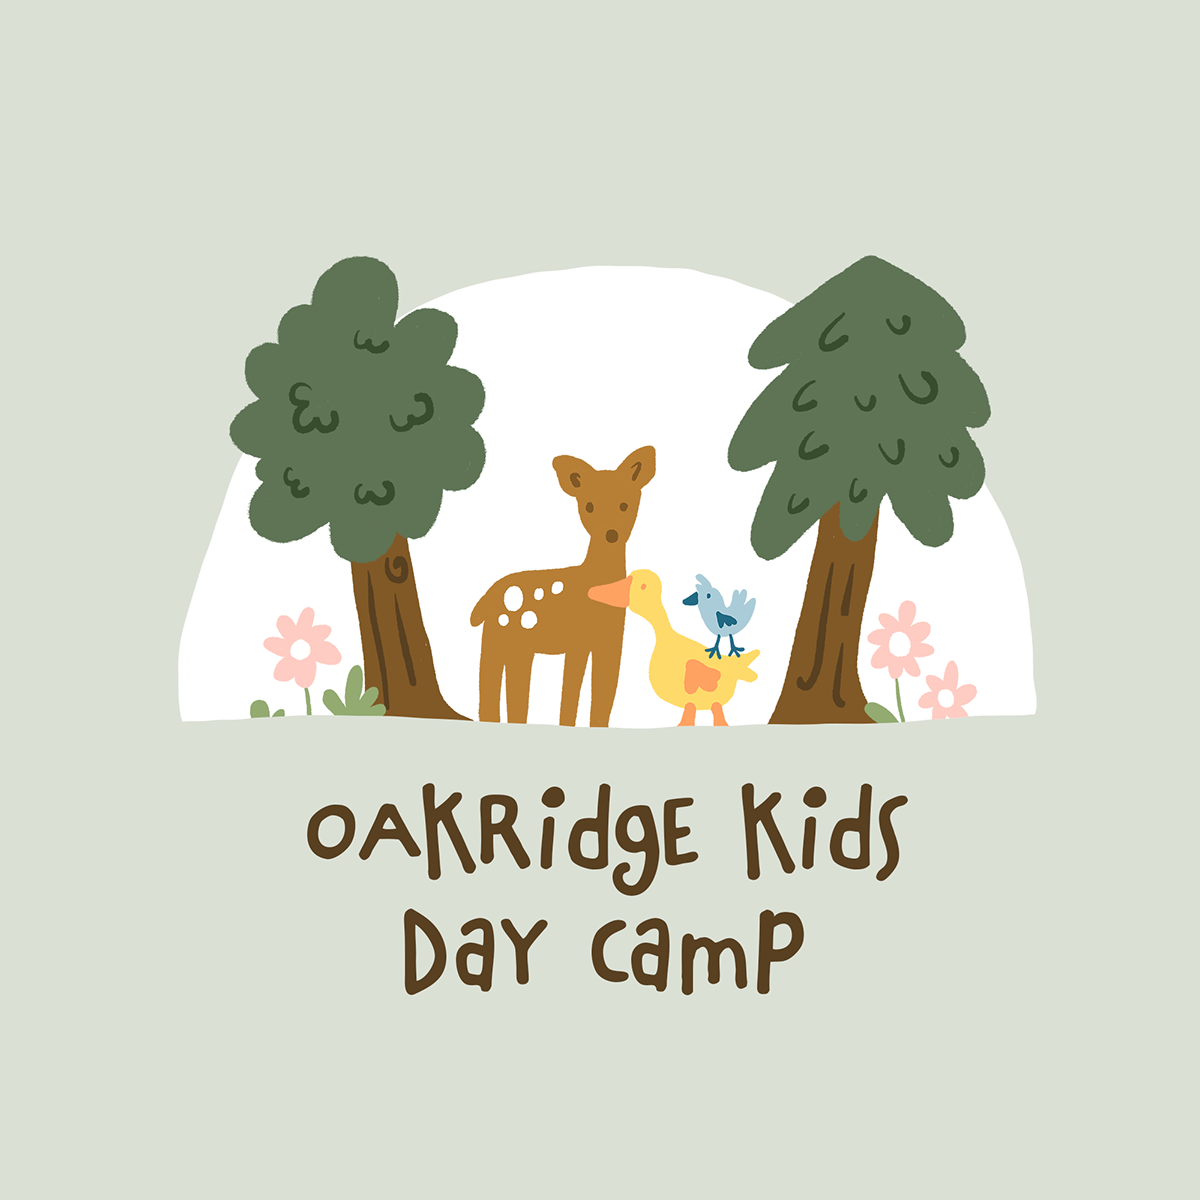 Kids Logo logos brand identity Nature school camp Fun outdoorsy School logos woodsy